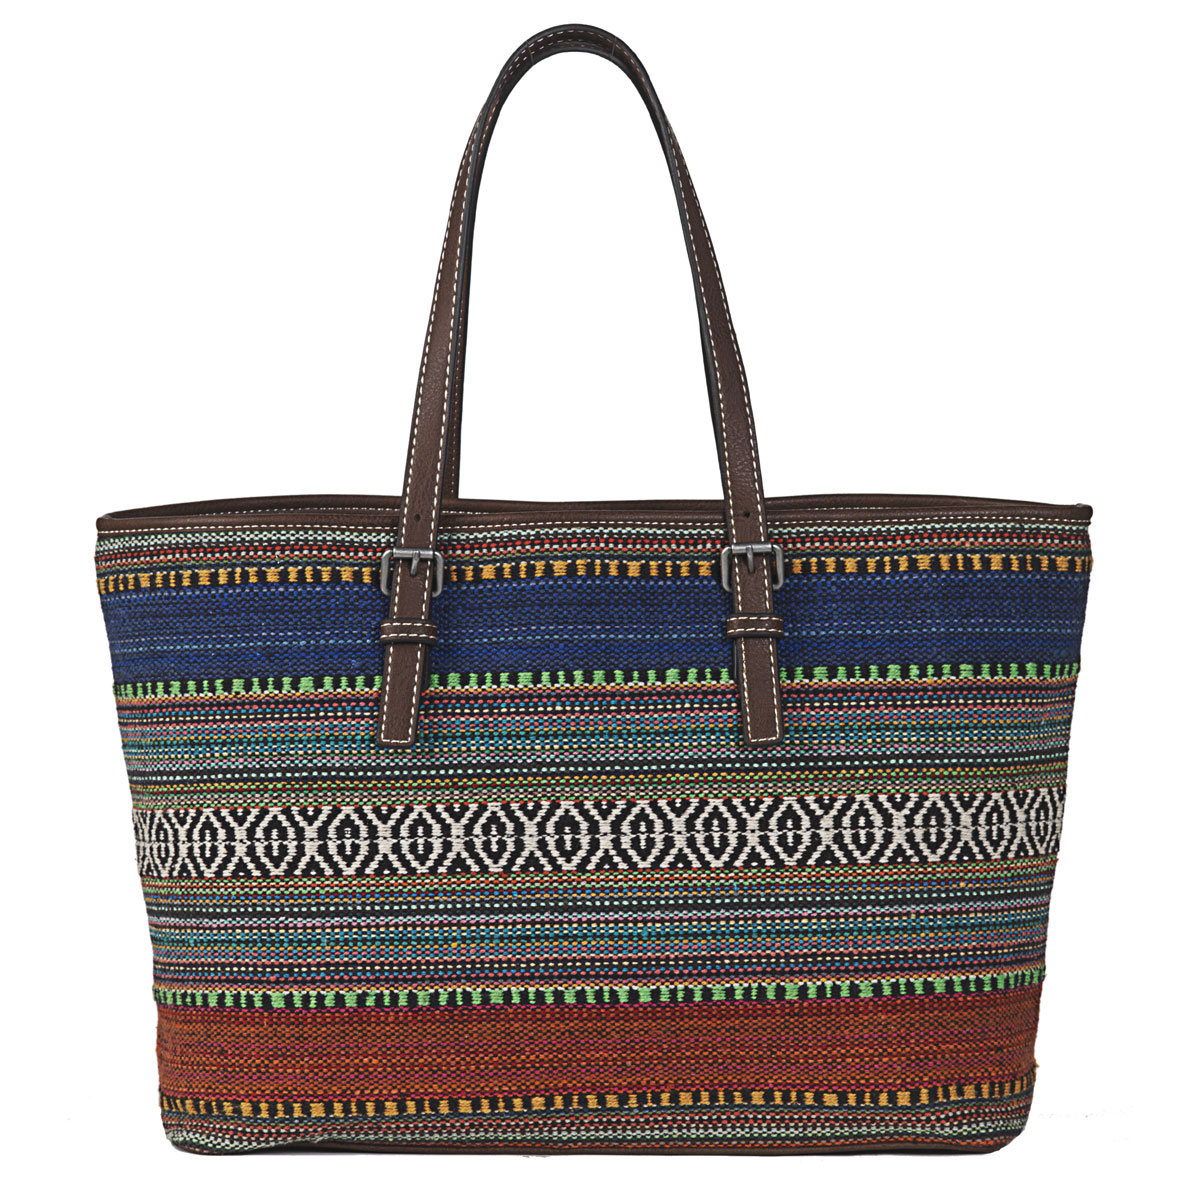 N770002397 Savannah Style Large Tote Bag, Multi Color - 18 X 11 X 5.75 In.